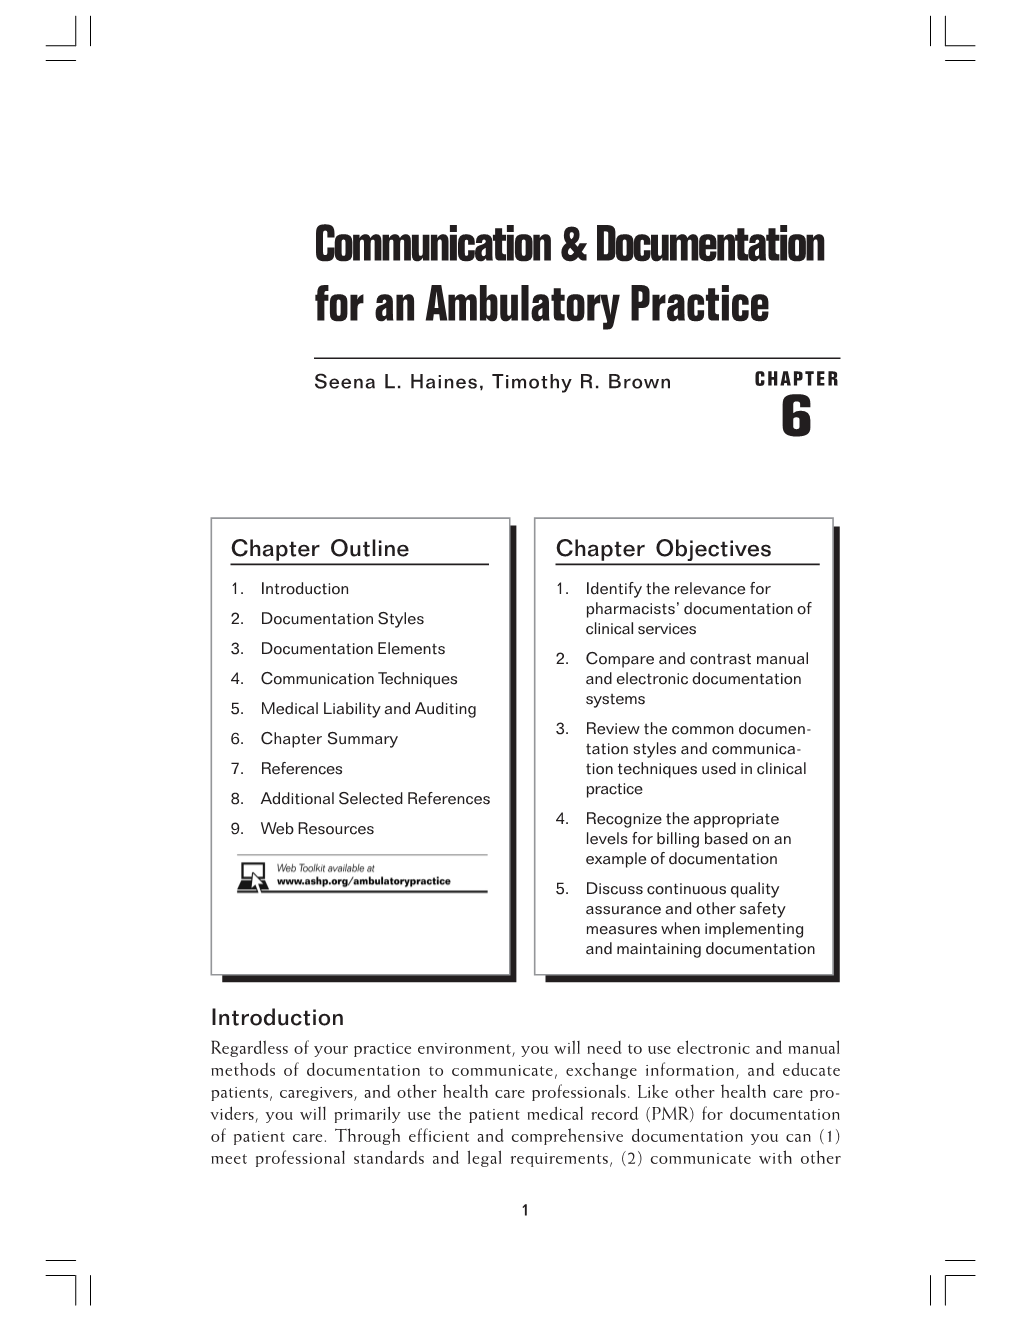 Communication & Documentation for an Ambulatory Practice